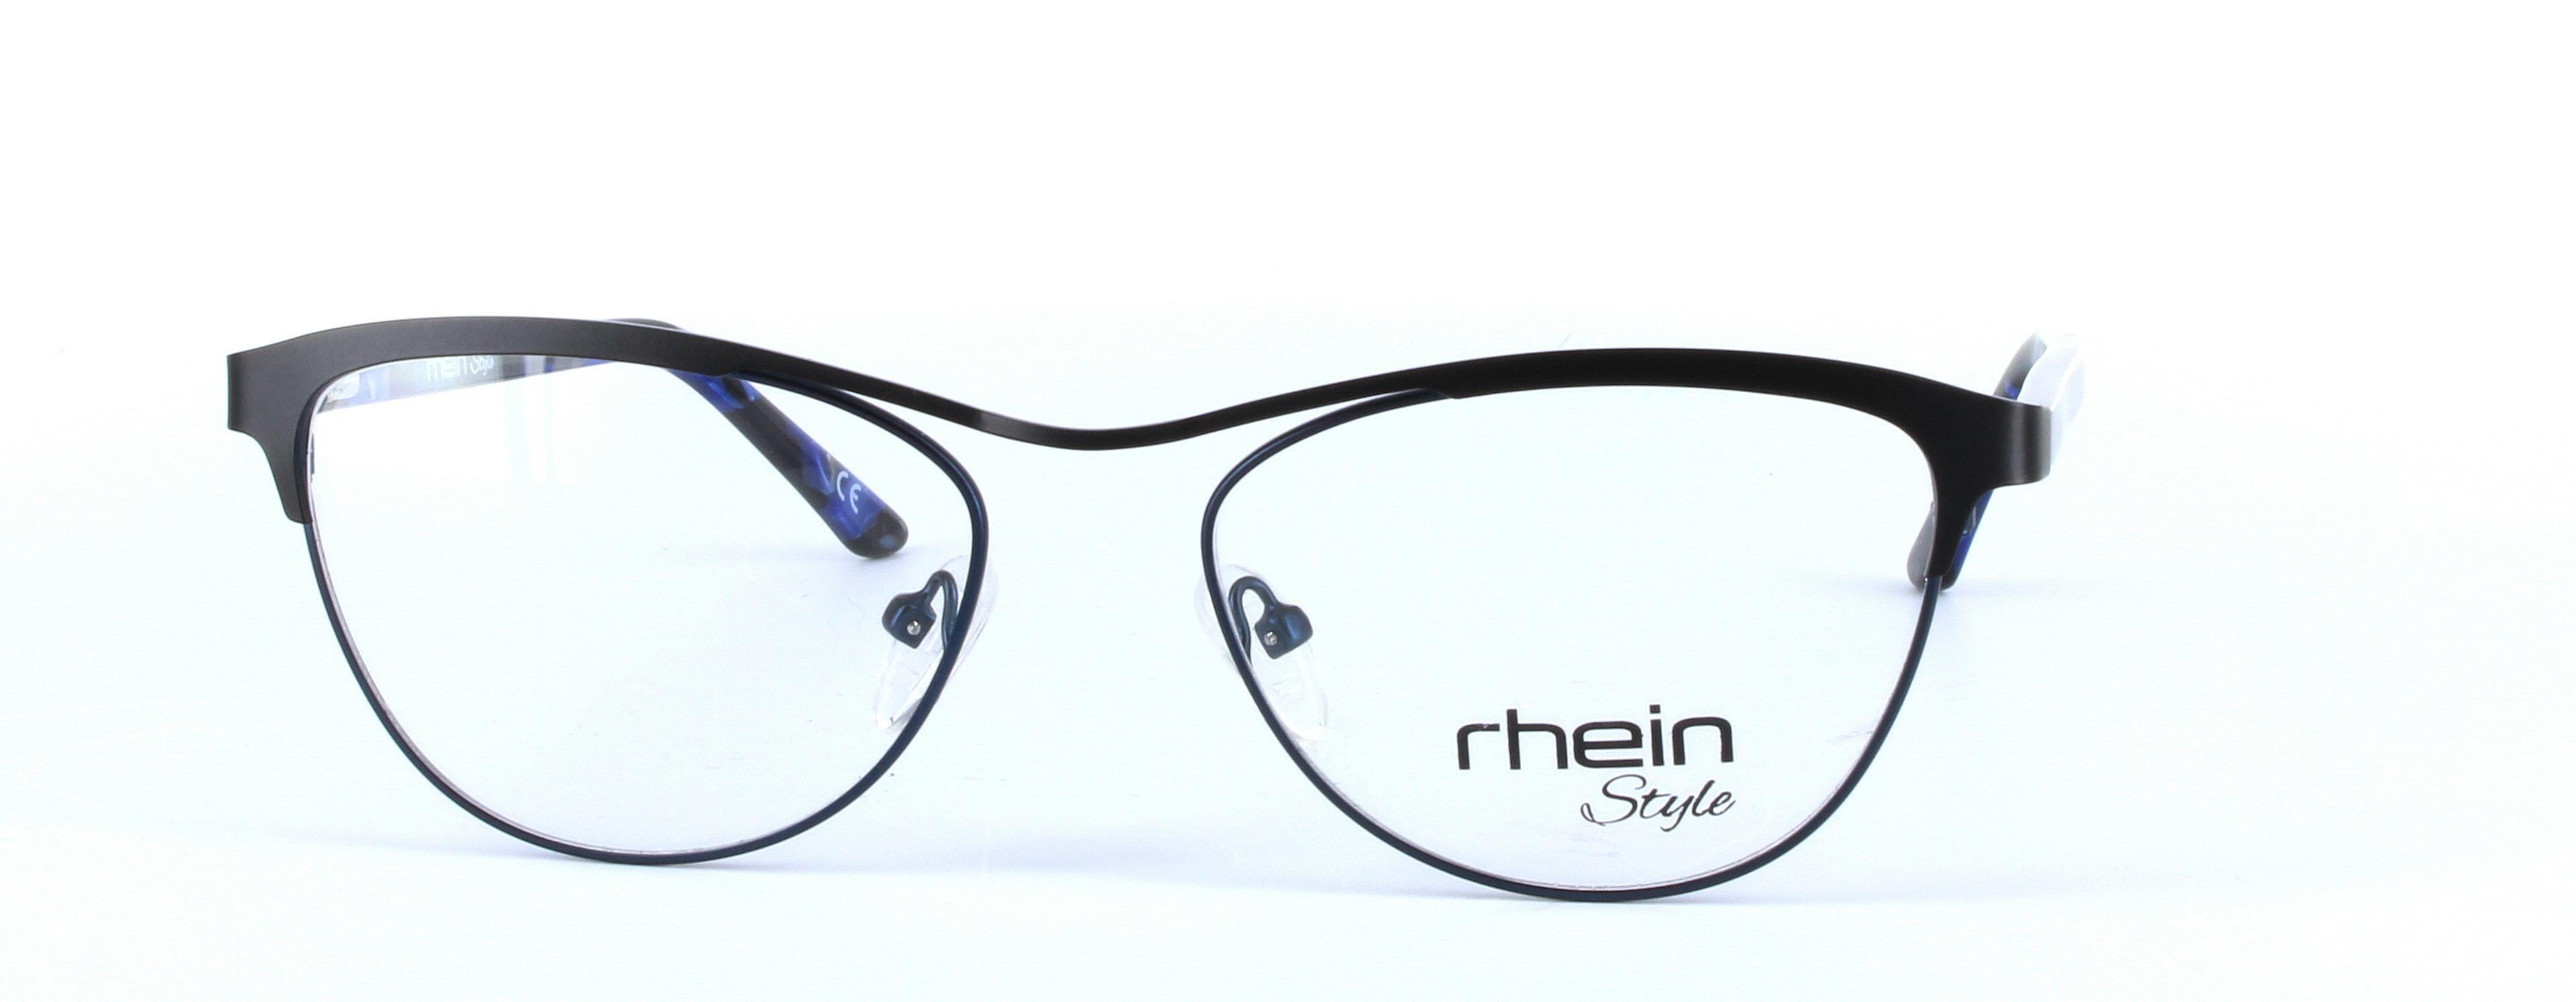 Bolla Gunmetal and Blue Full Rim Oval Metal Glasses - Image View 5